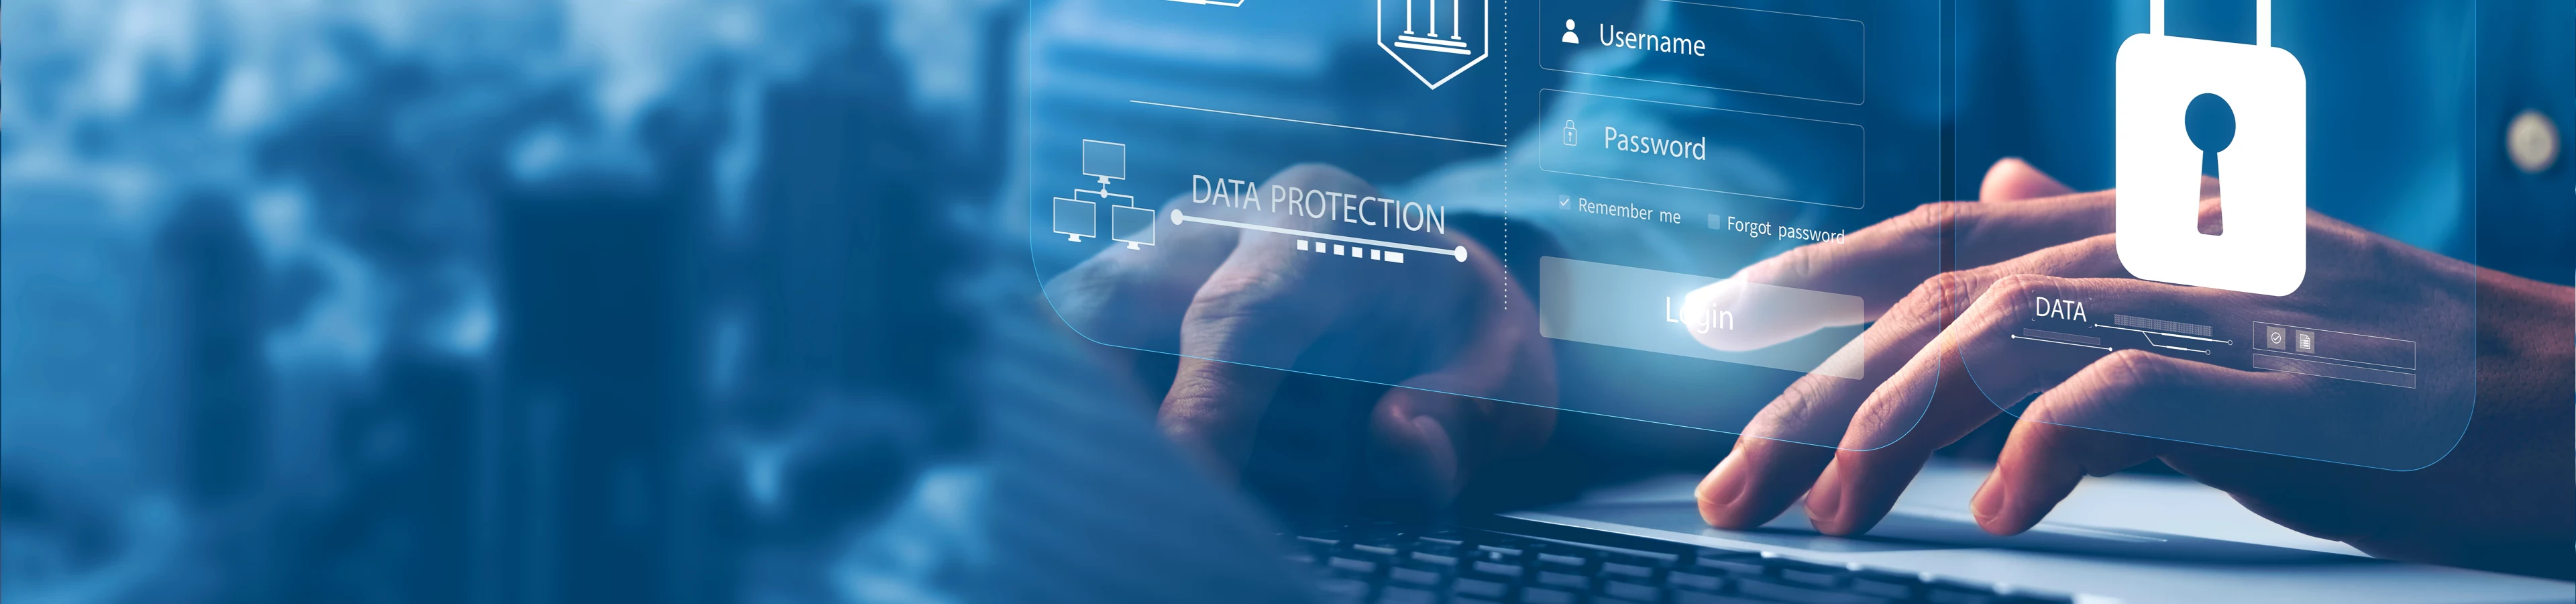 Data protecton